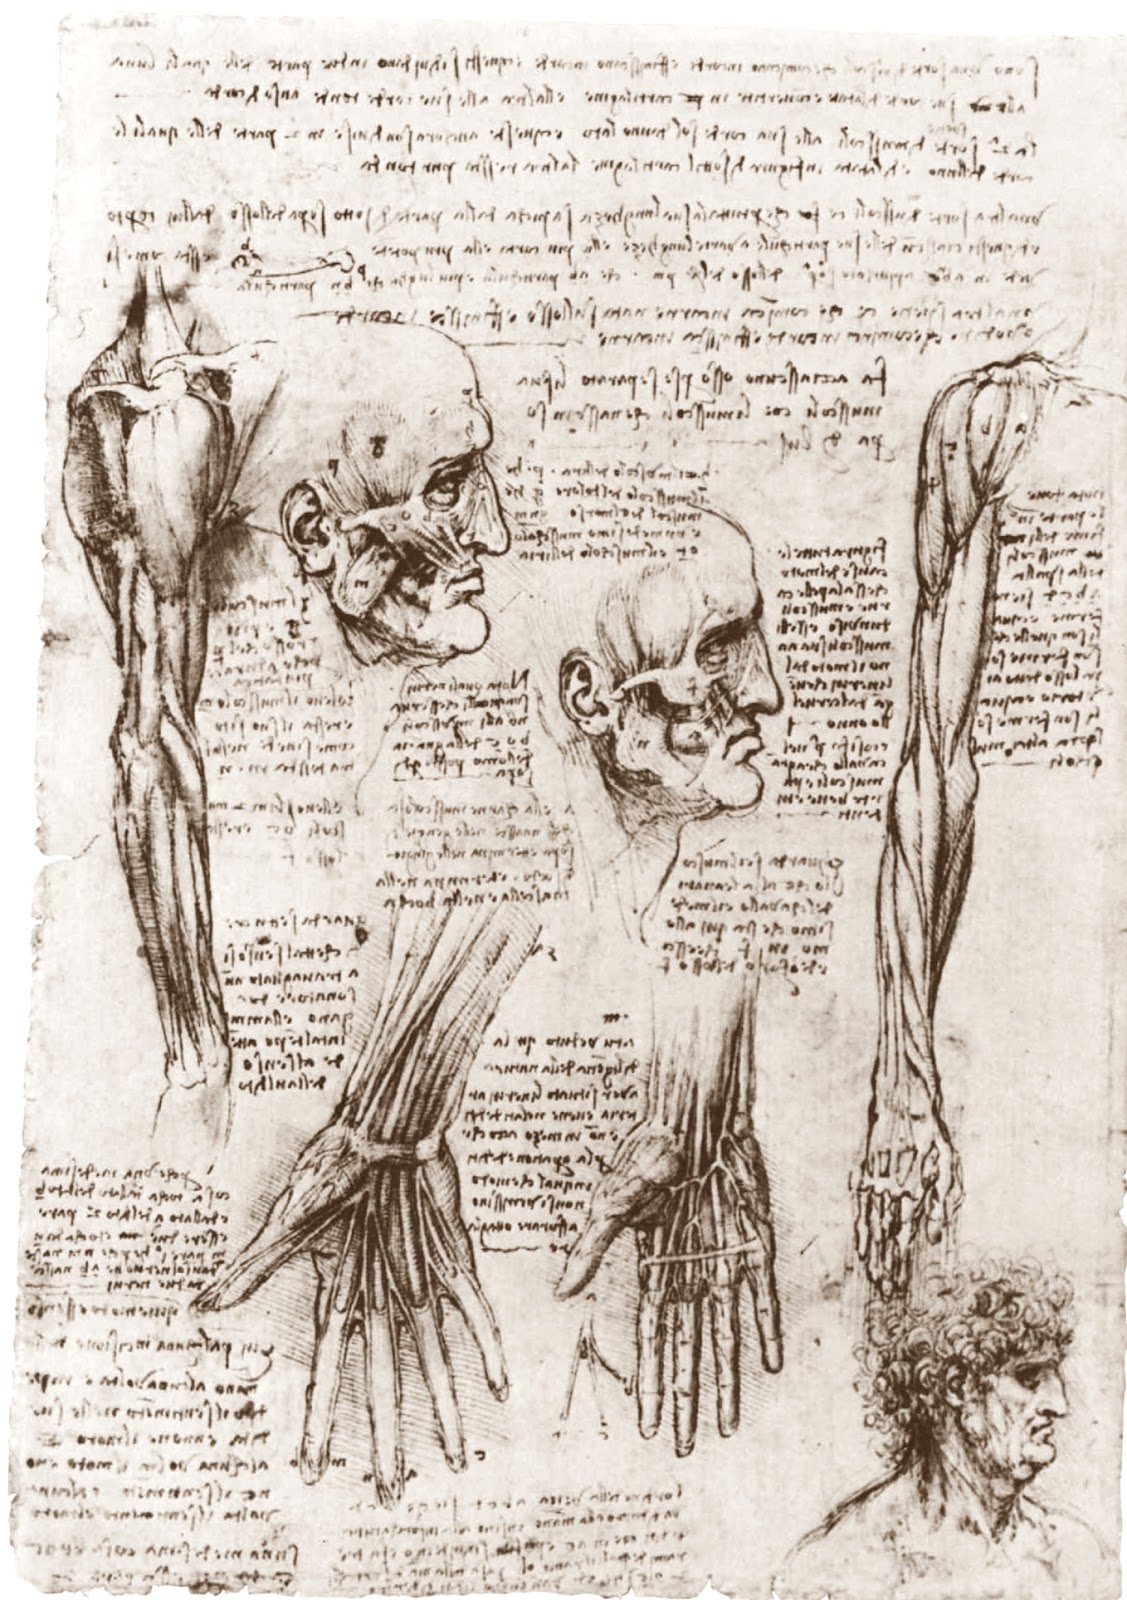 Leonardo+da+Vinci-1452-1519 (800).jpg